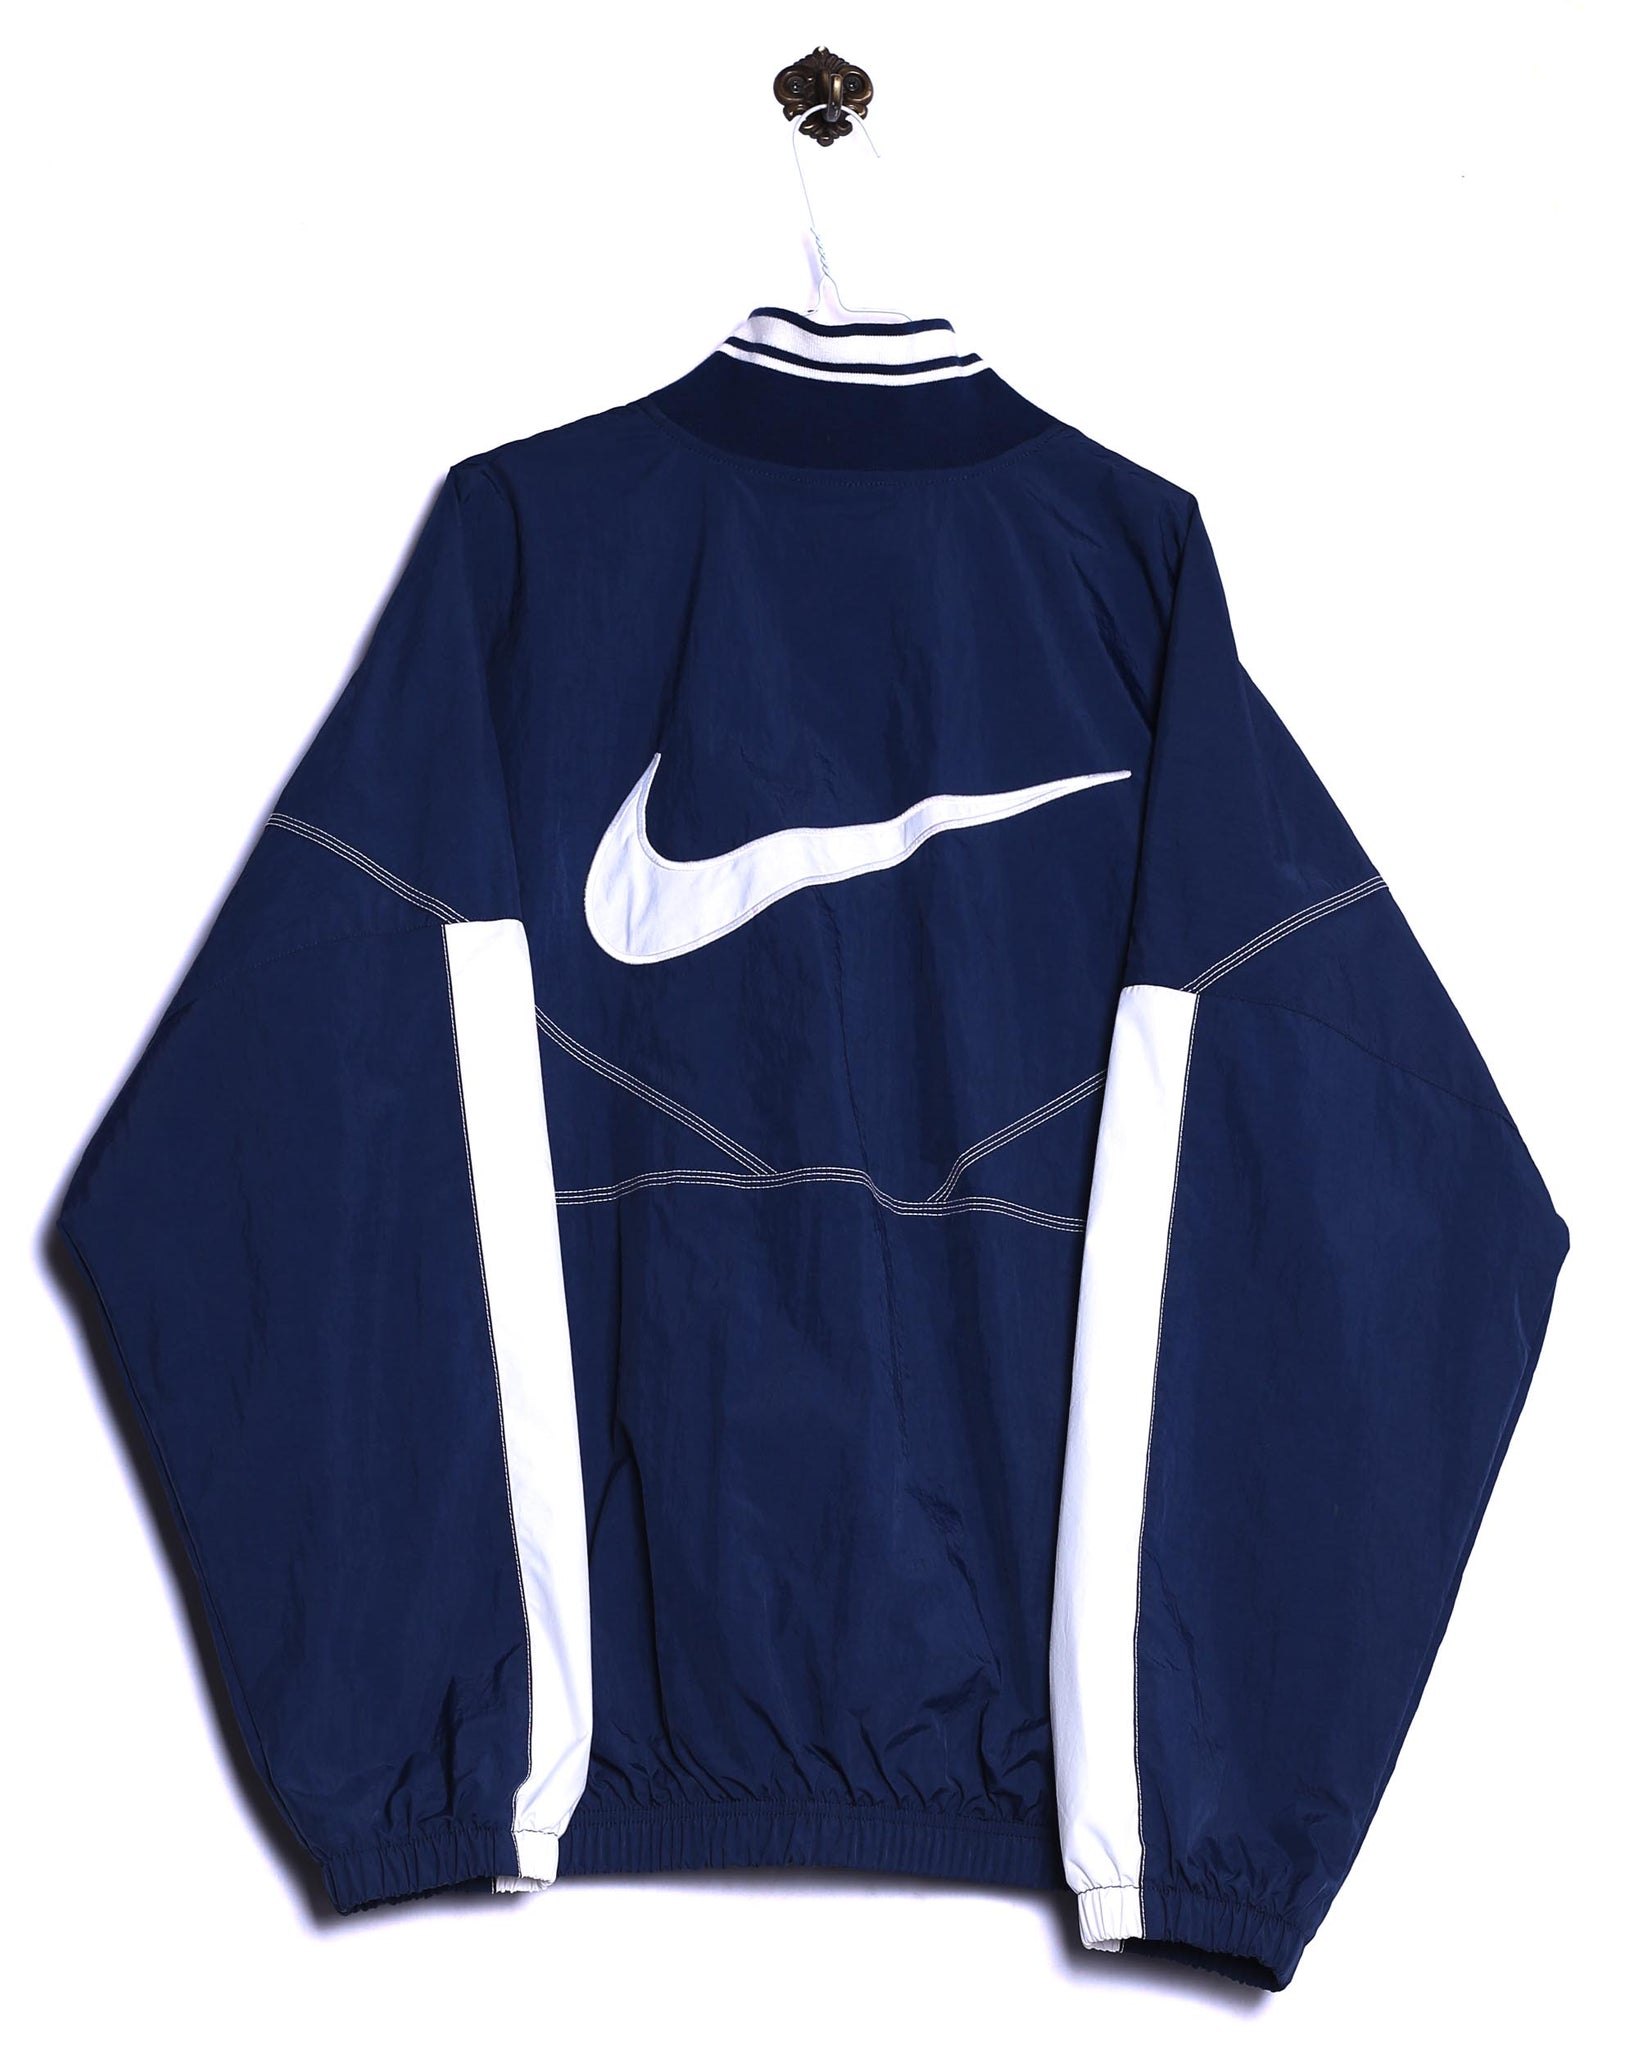 Vintage Nike Trainings Jacke Trainigsjacke mit weißen Nähten Stick Blau Rückseite